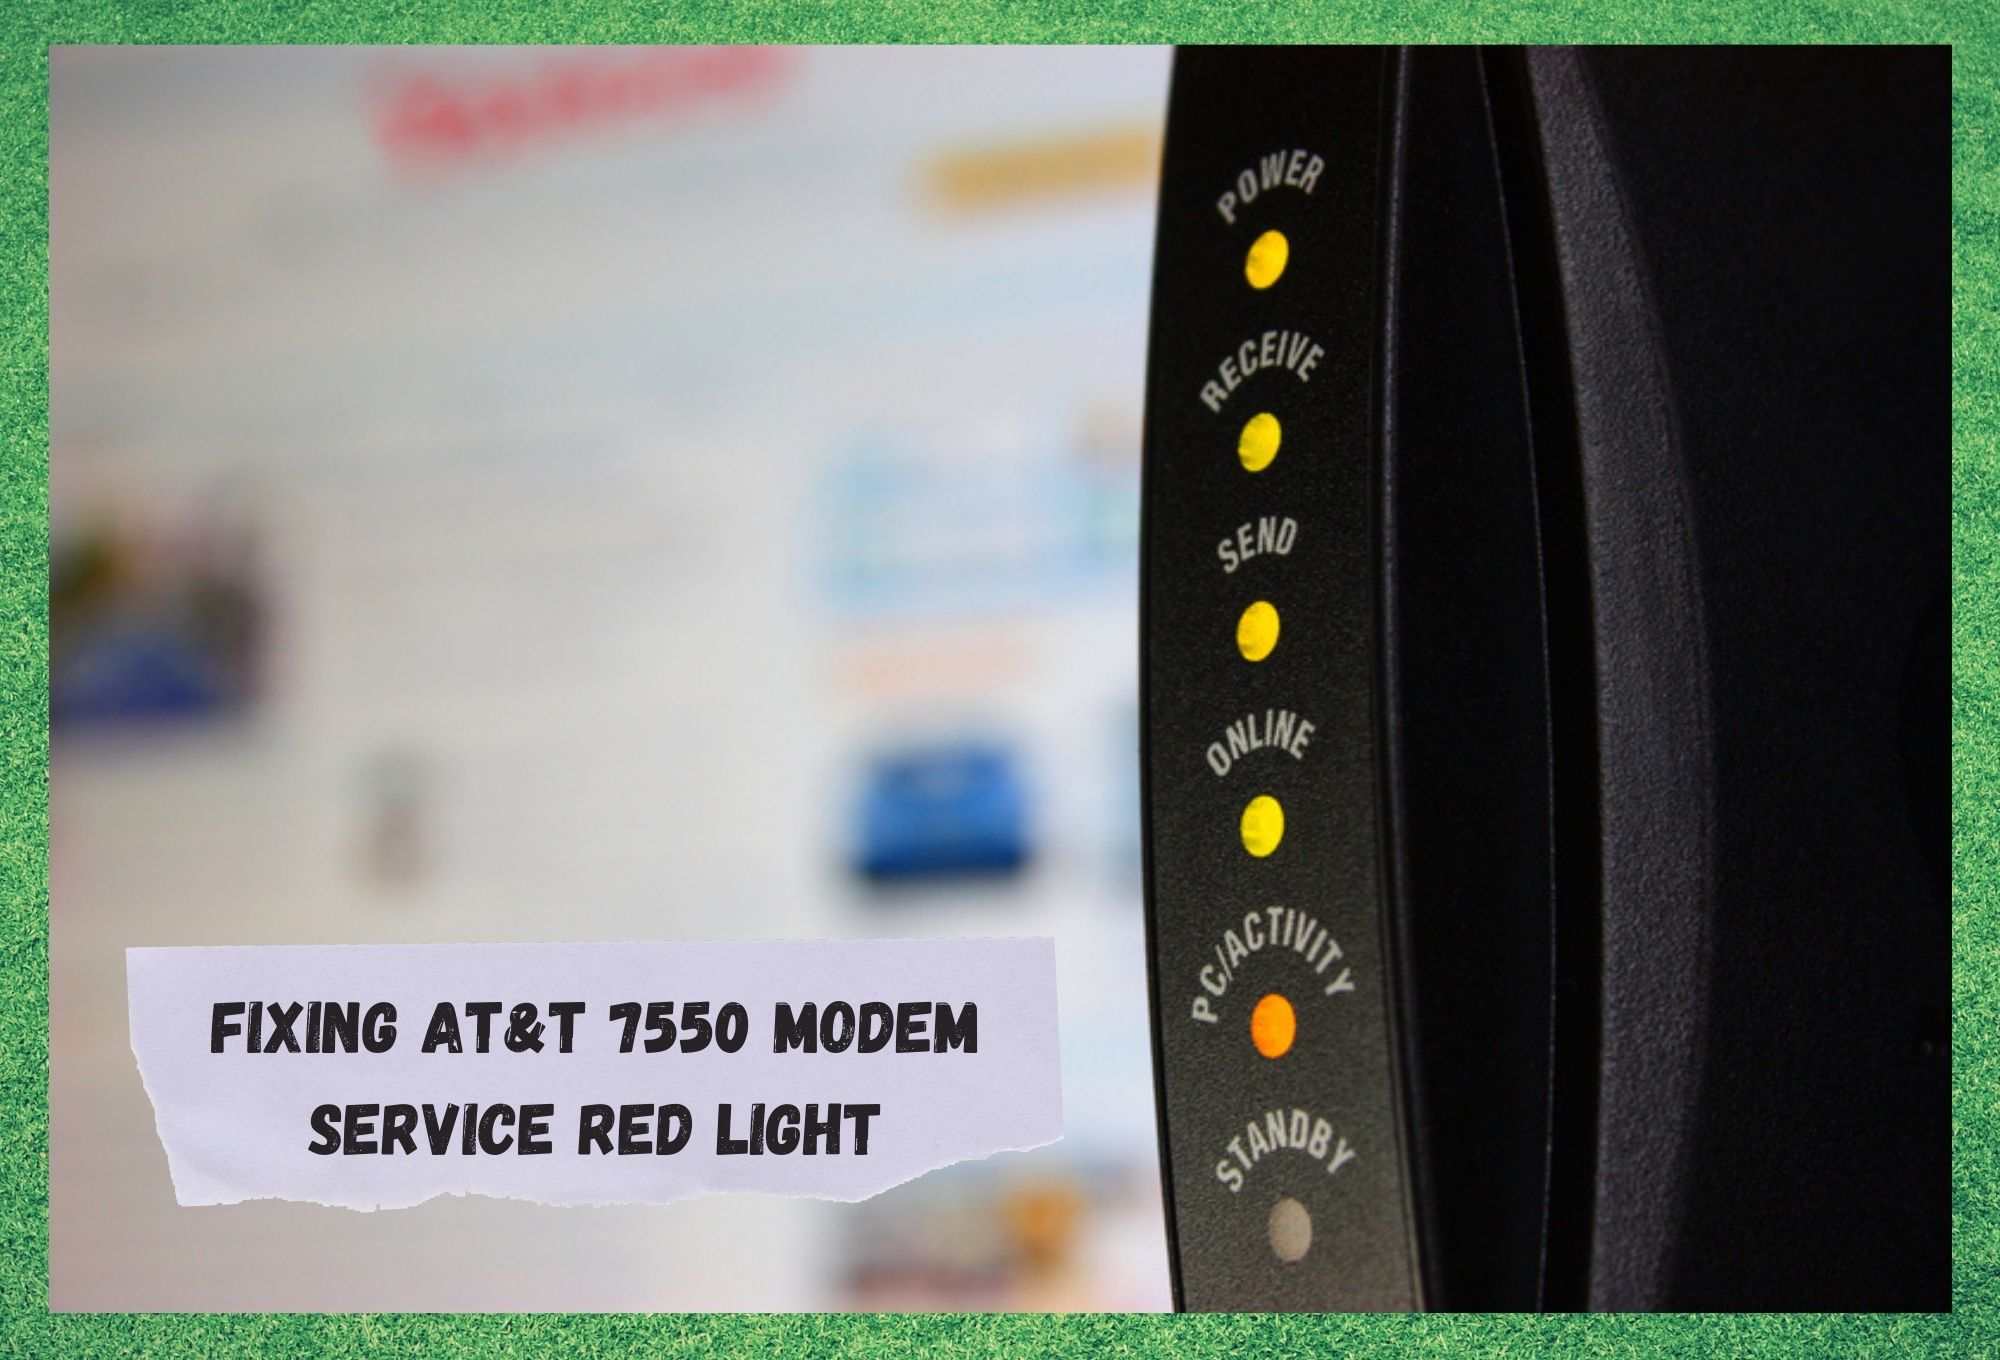 AT&amp;T Modem ဝန်ဆောင်မှု Red Light ကို ပြင်ဆင်ရန် နည်းလမ်း 3 ခု